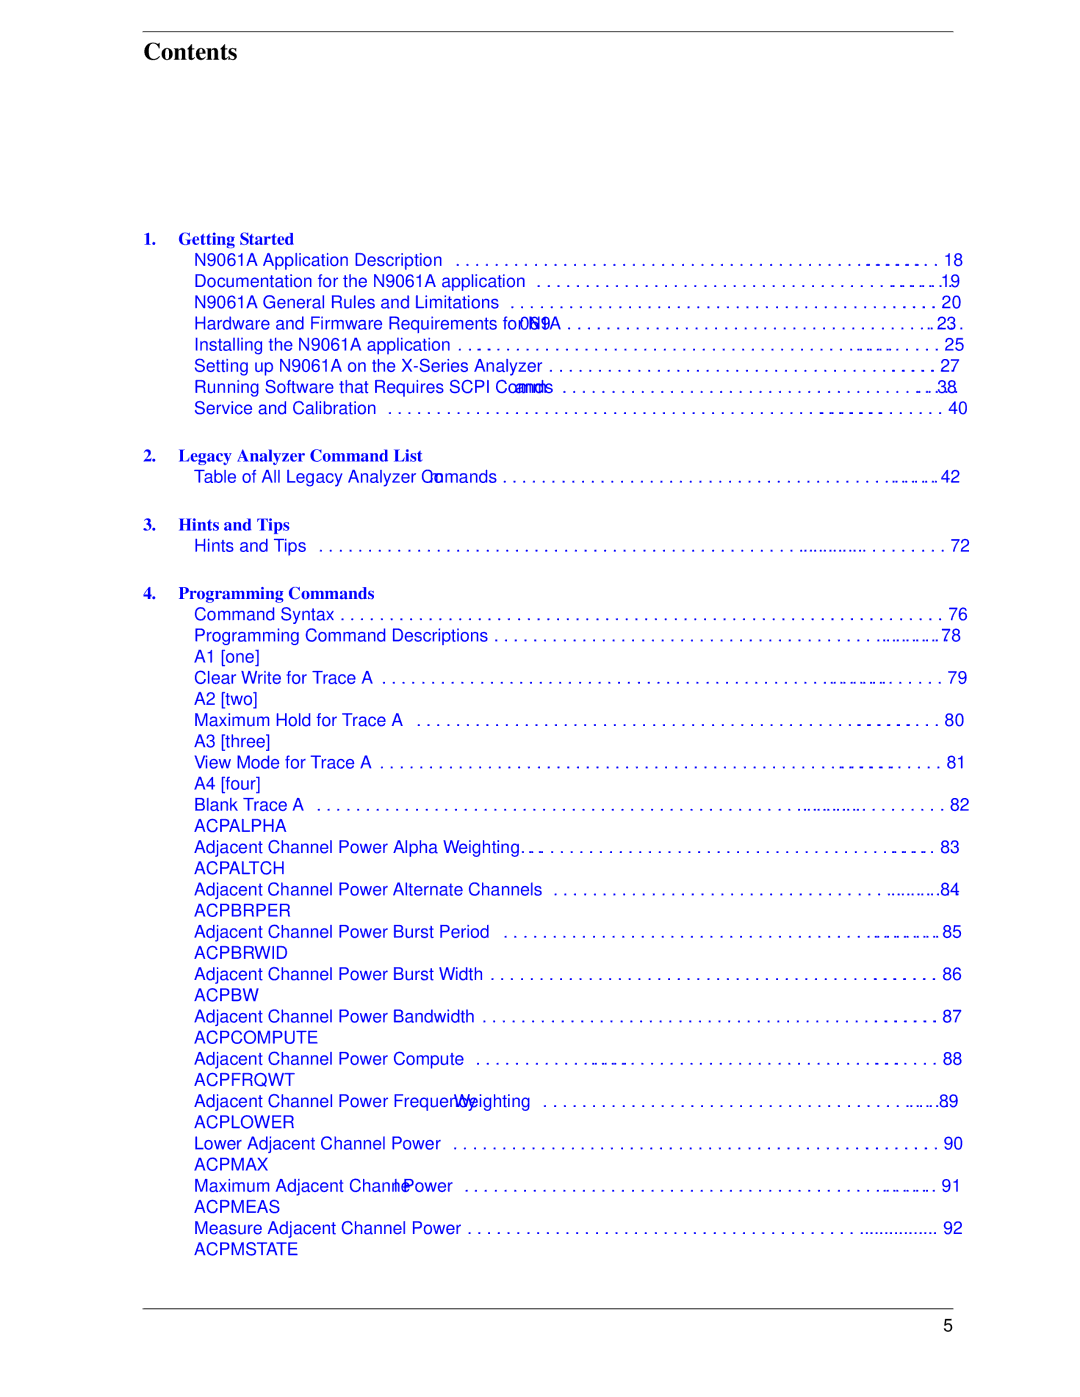 Agilent Technologies N9030a manual Contents 